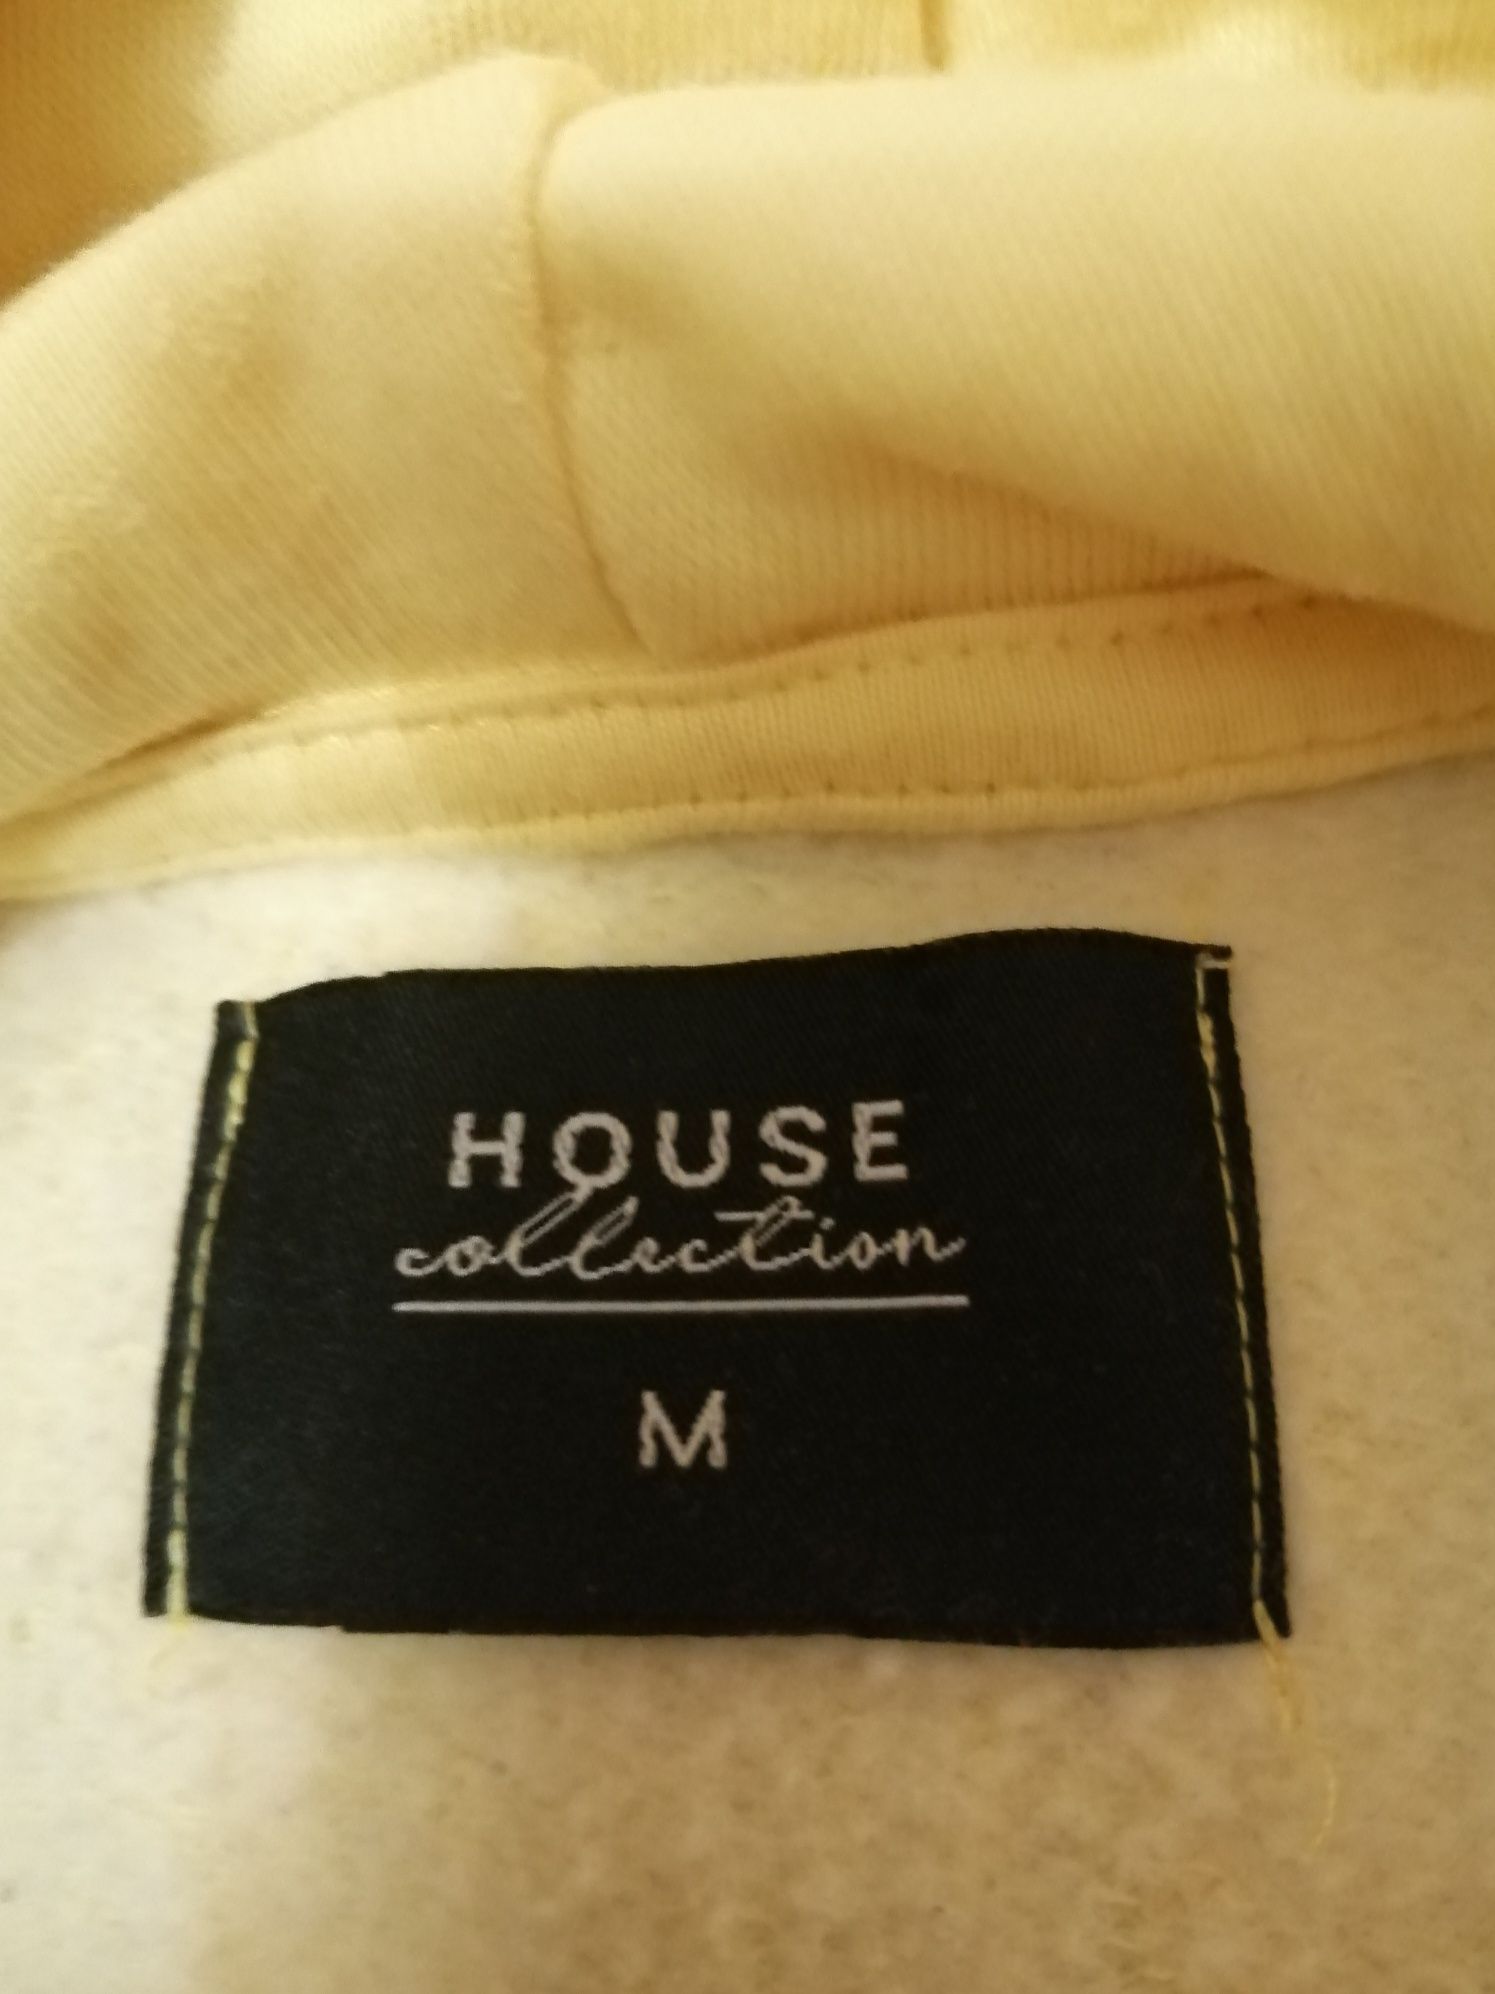 Bluza z kapturem marka House rozmiar M/ L